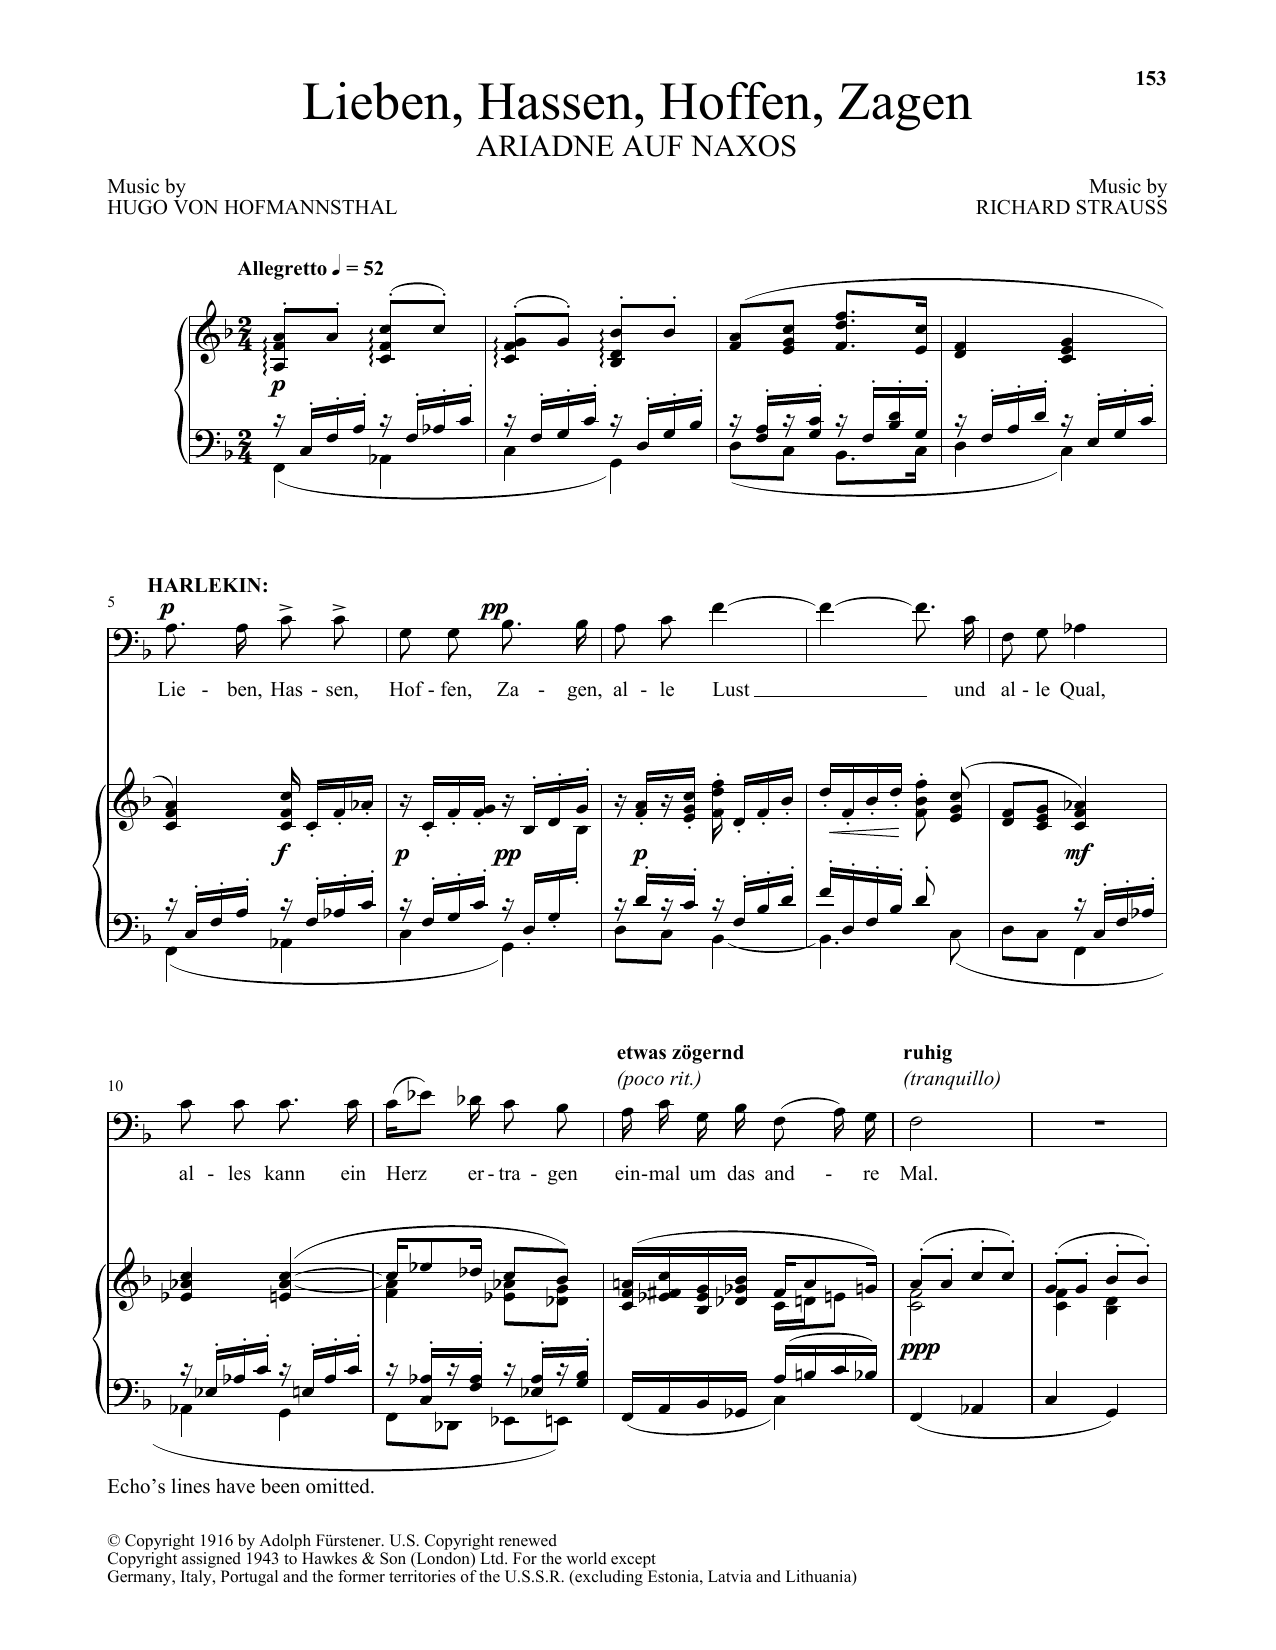 Richard Strauss Lieben, Hassen, Hoffen, Zagen sheet music notes and chords arranged for Piano & Vocal